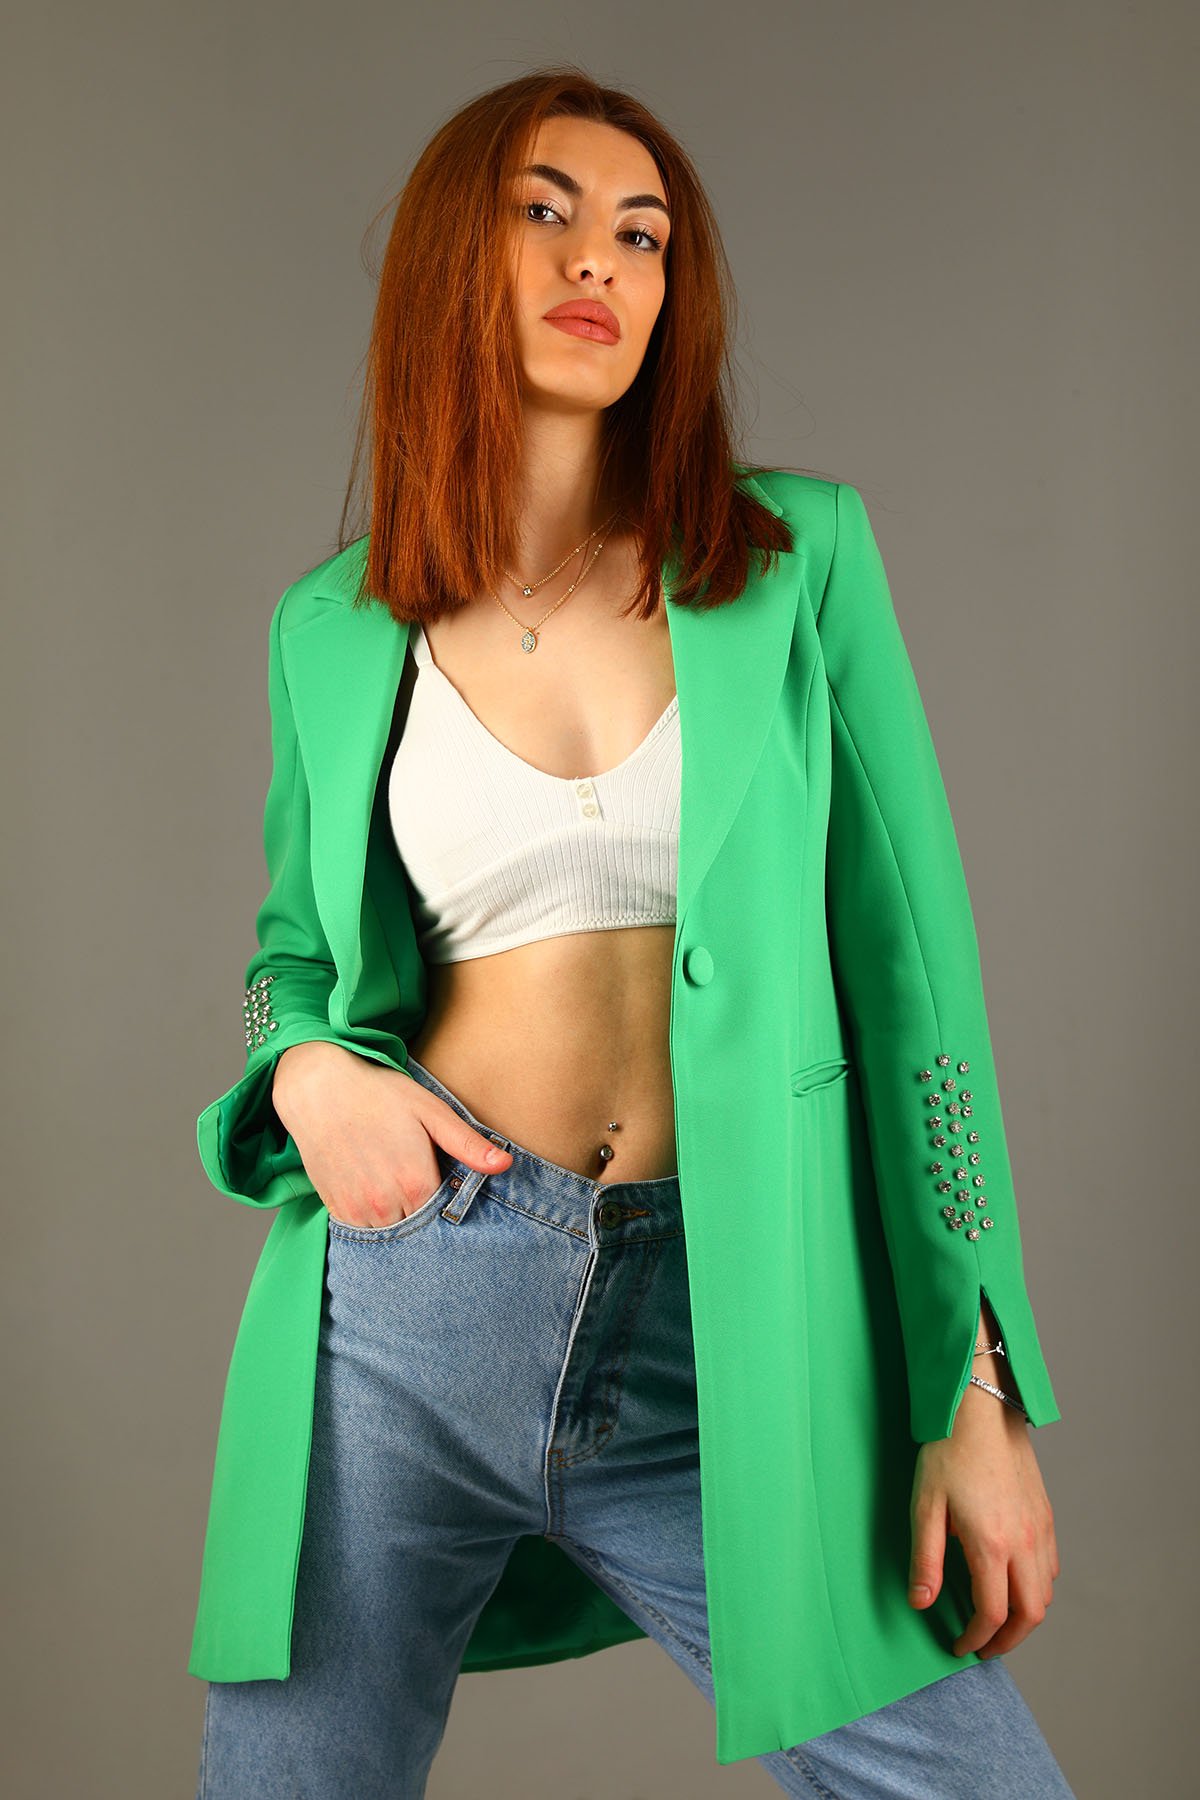 Kadın Kol Taş Detaylı Sahte Cepli Uzun Blazer Ceket Yeşil 498929 - tozlu.com